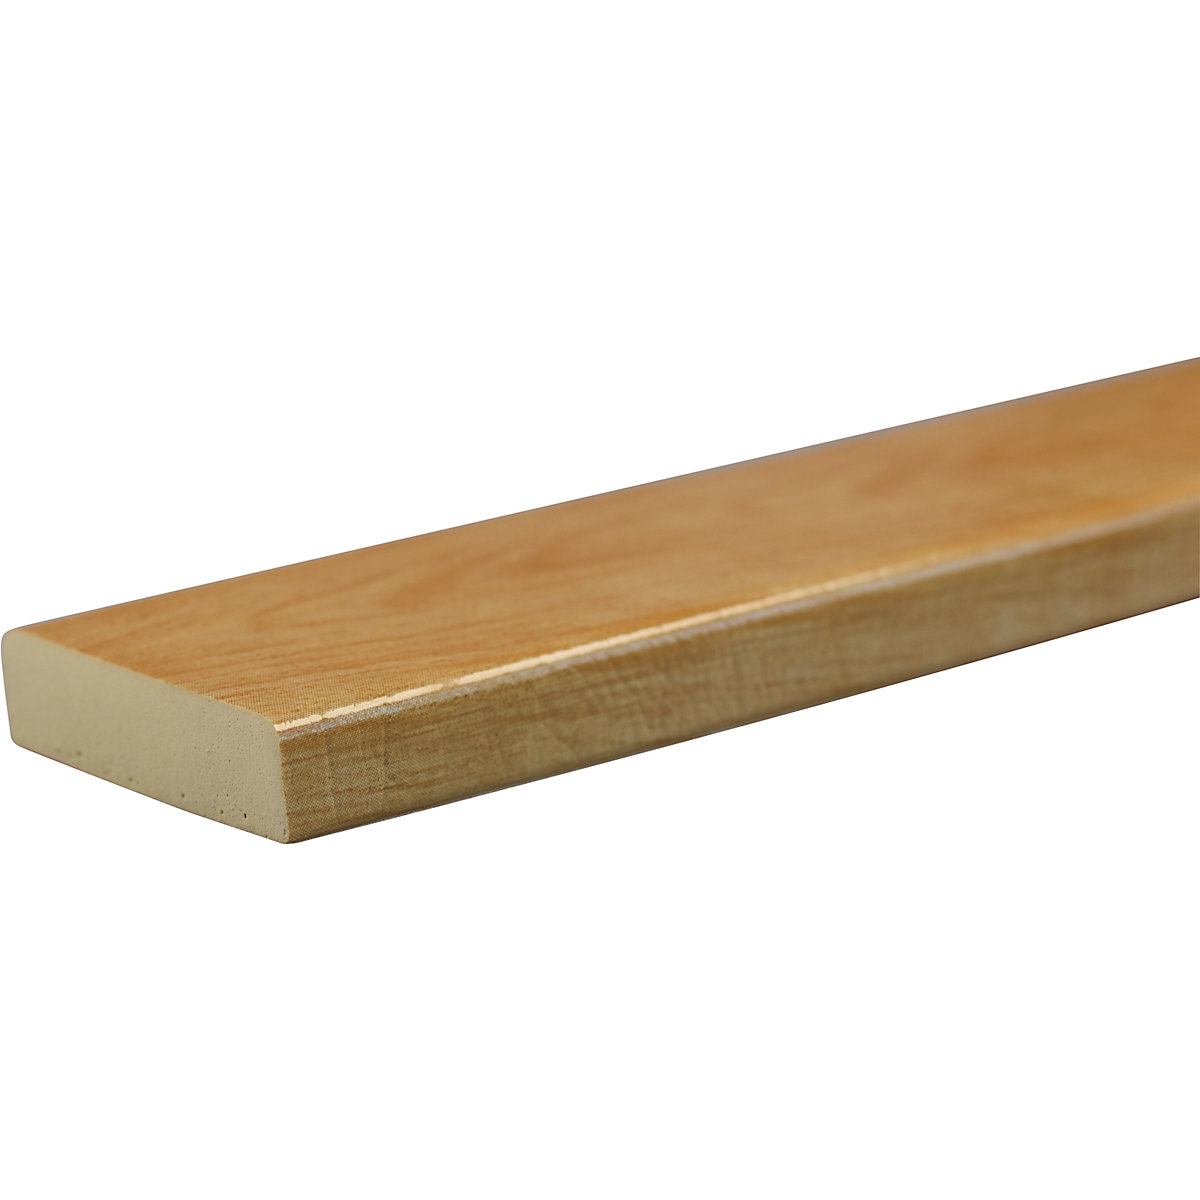 Knuffi®-oppervlaktebescherming – SHG, type S, stuk van 1 m, gecoat hout naturel-28